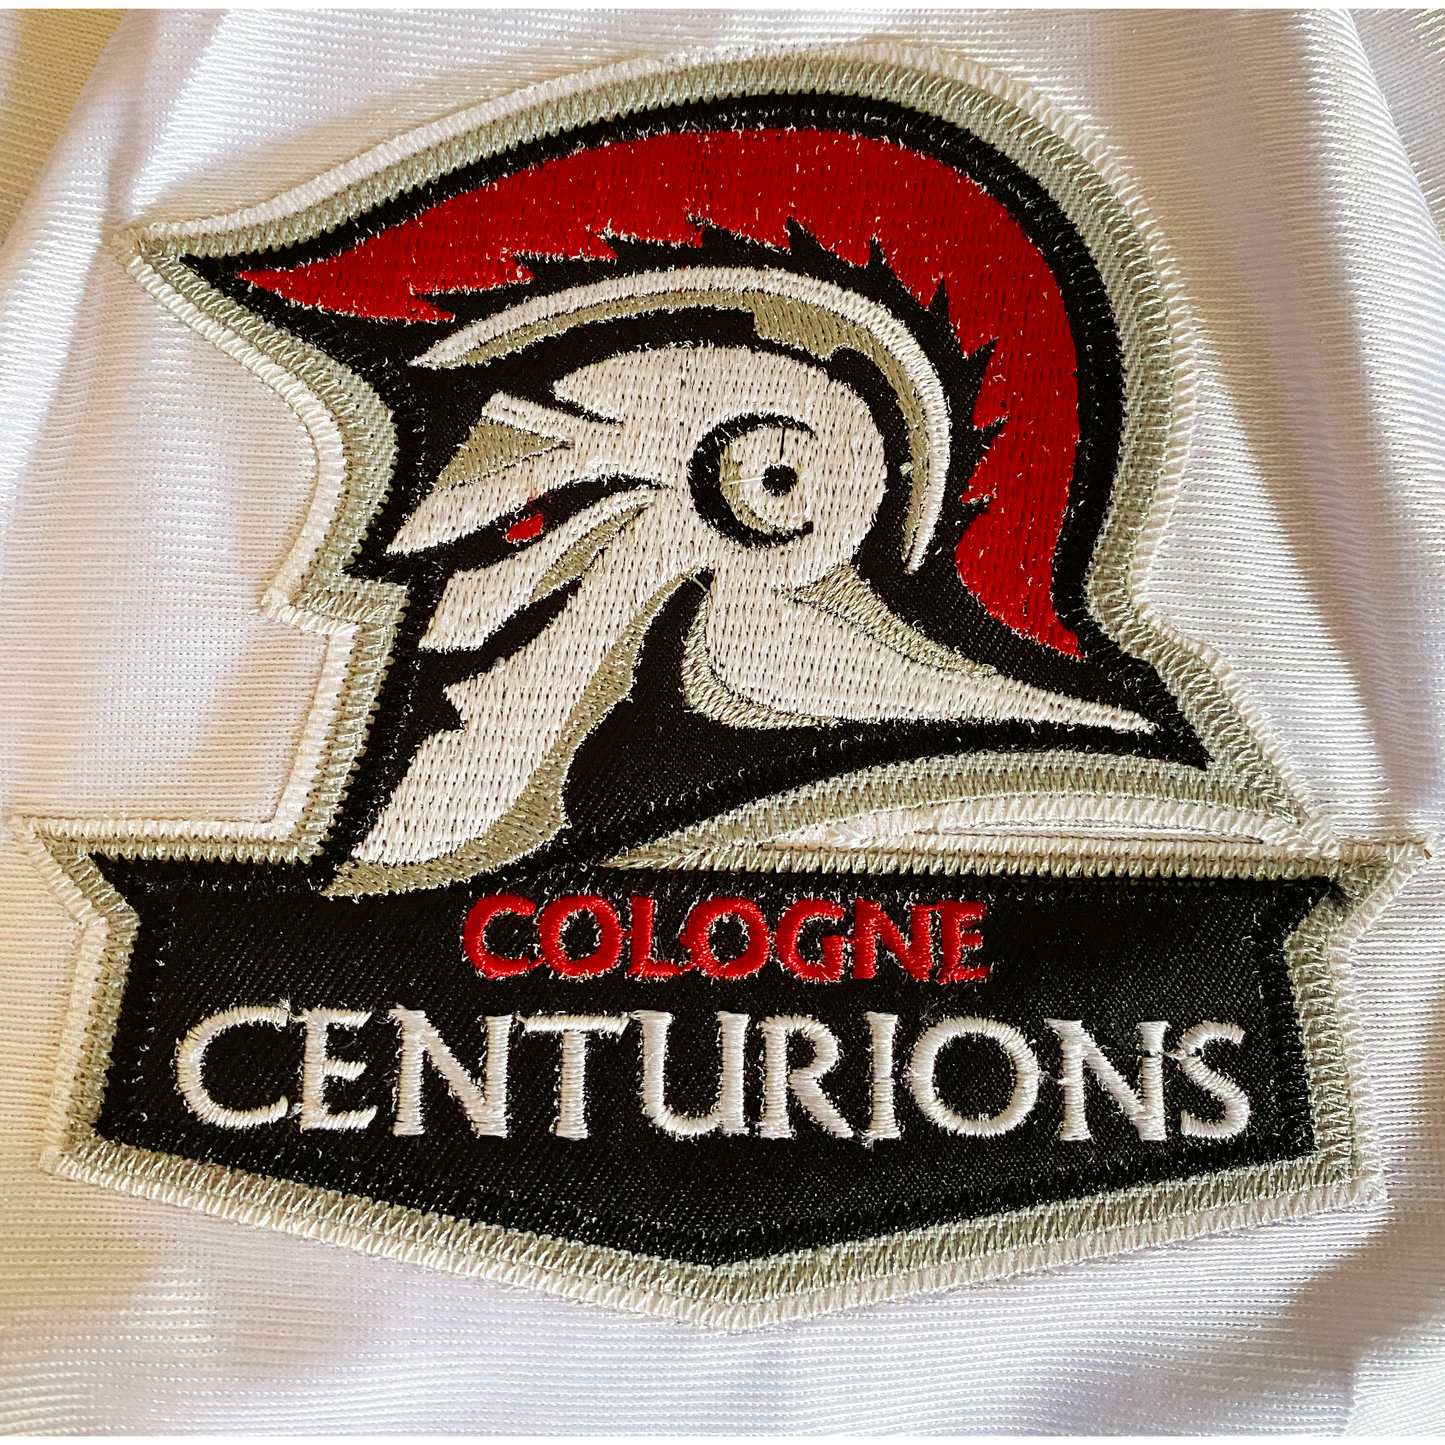 Cologne Centurions Jersey